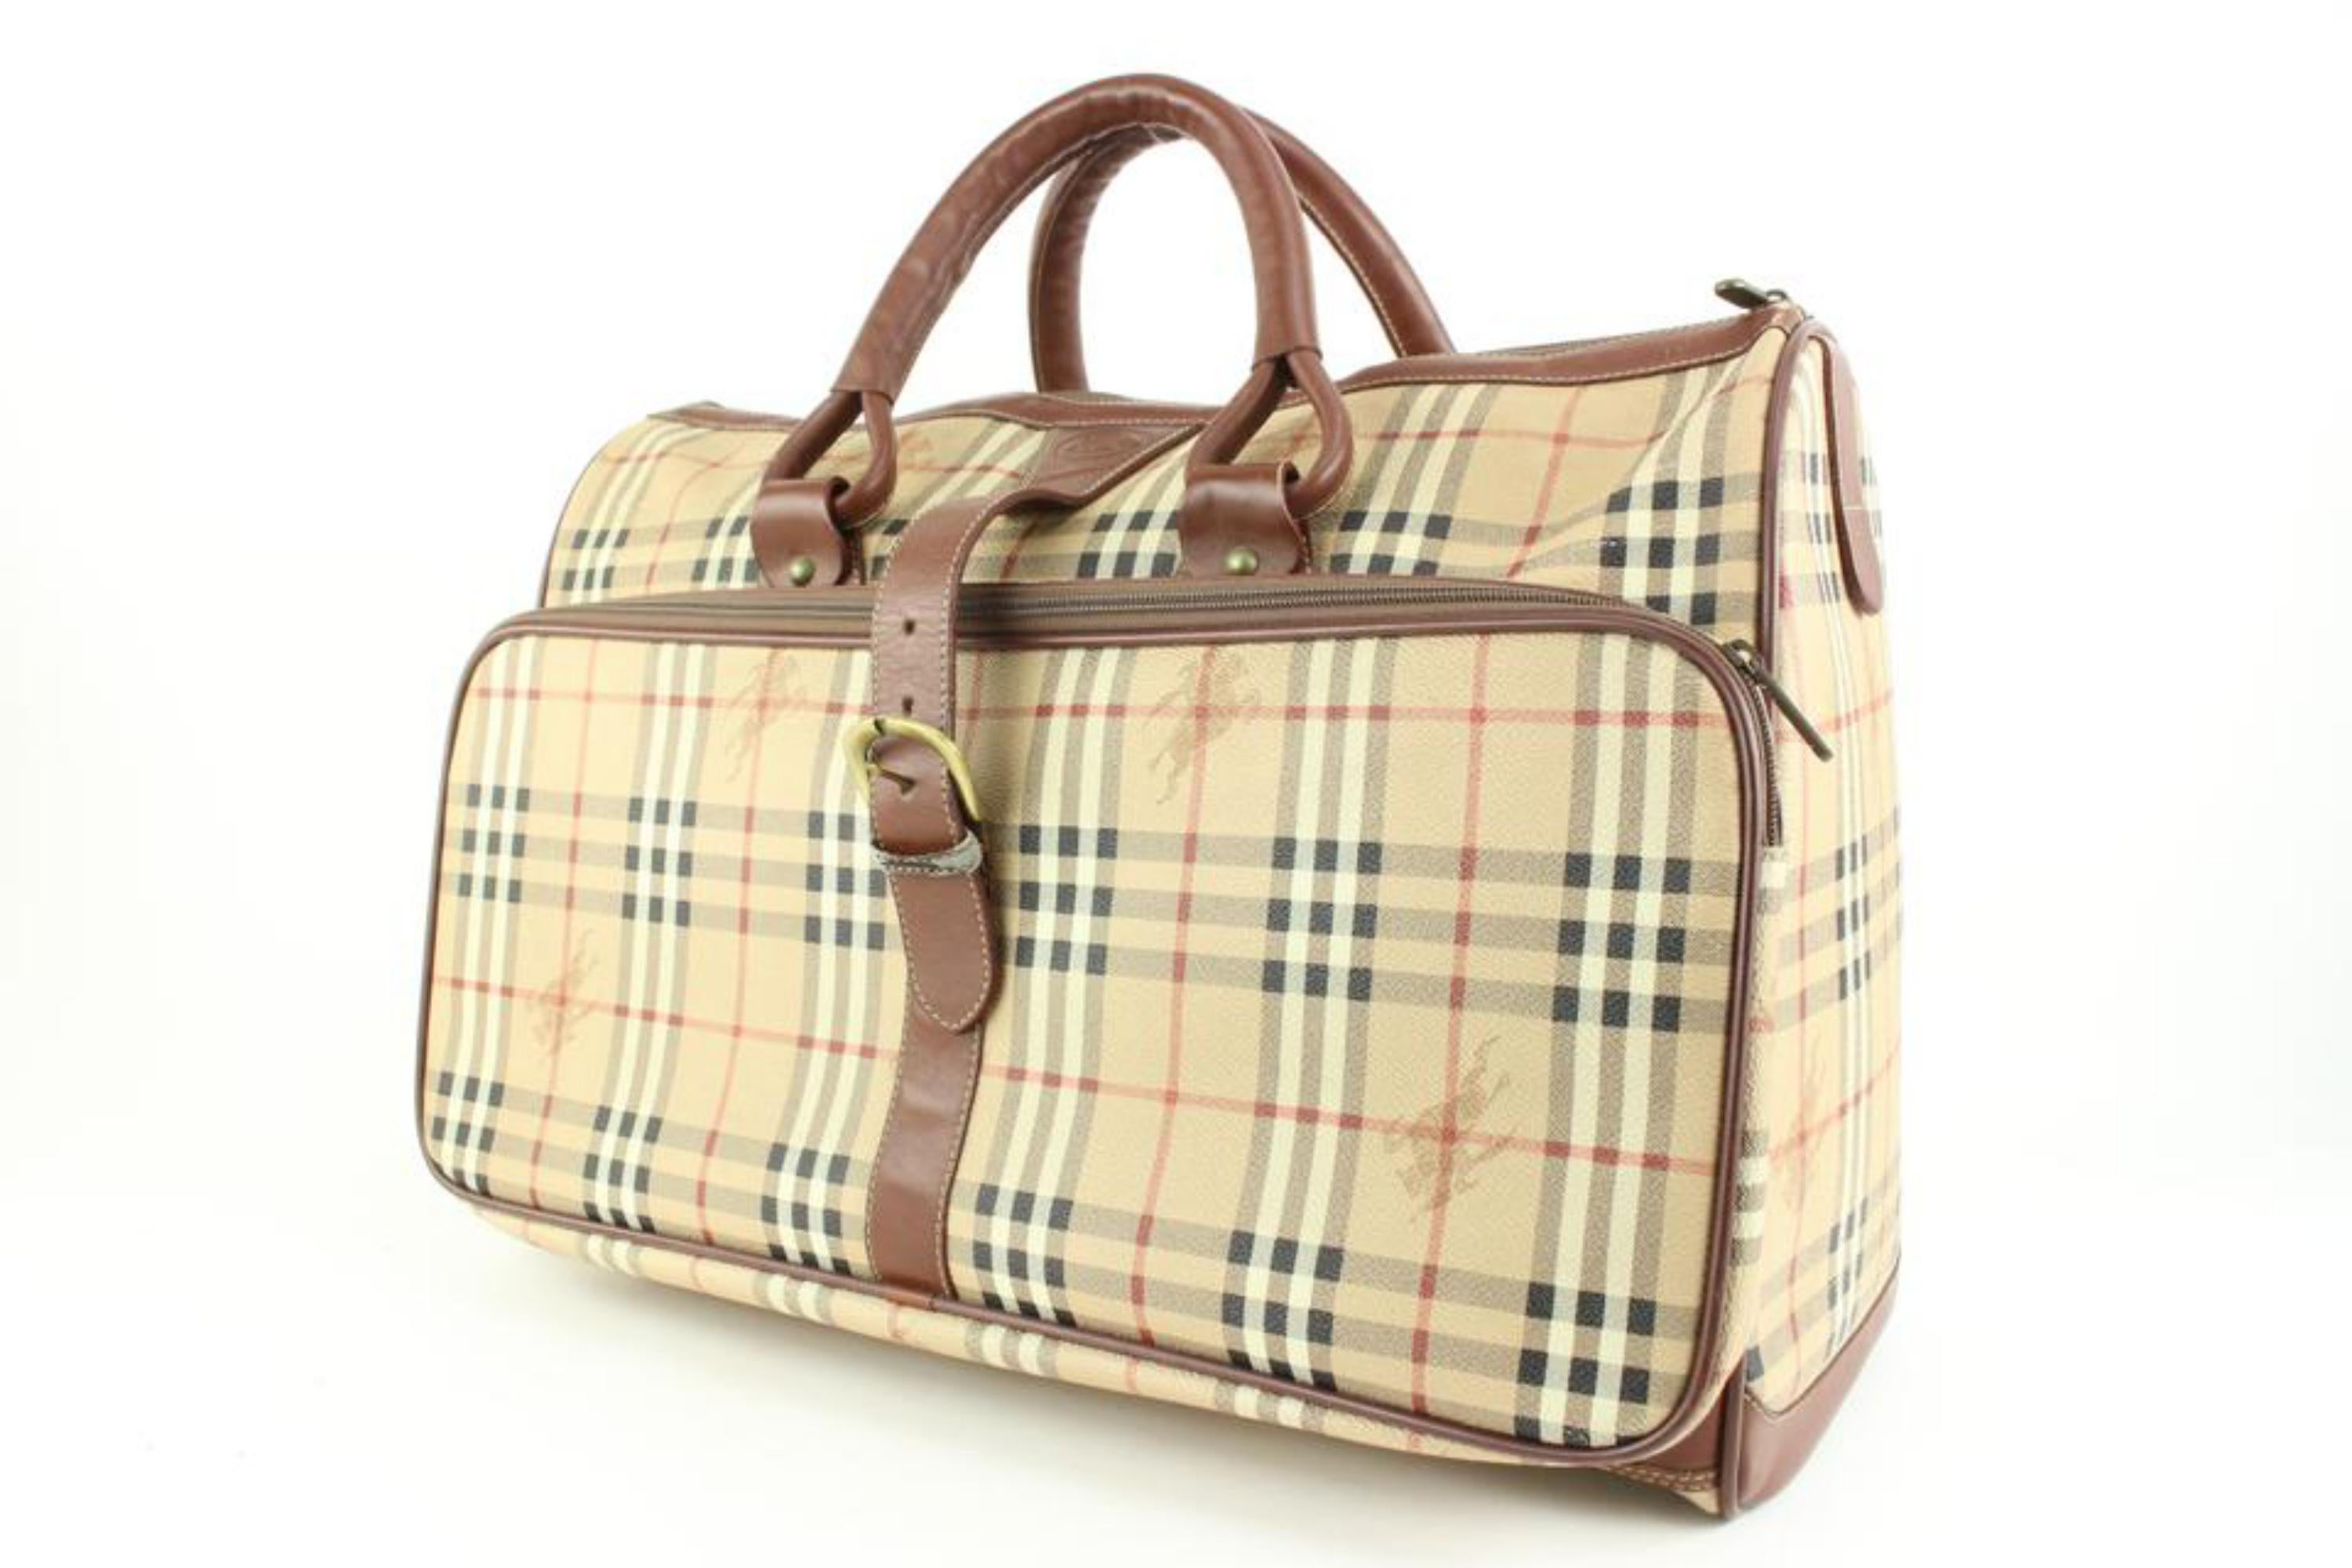 Burberry Beige Nova Check Travel Duffle Bag 113b54
Made In: Italy
Measurements: Length:  20